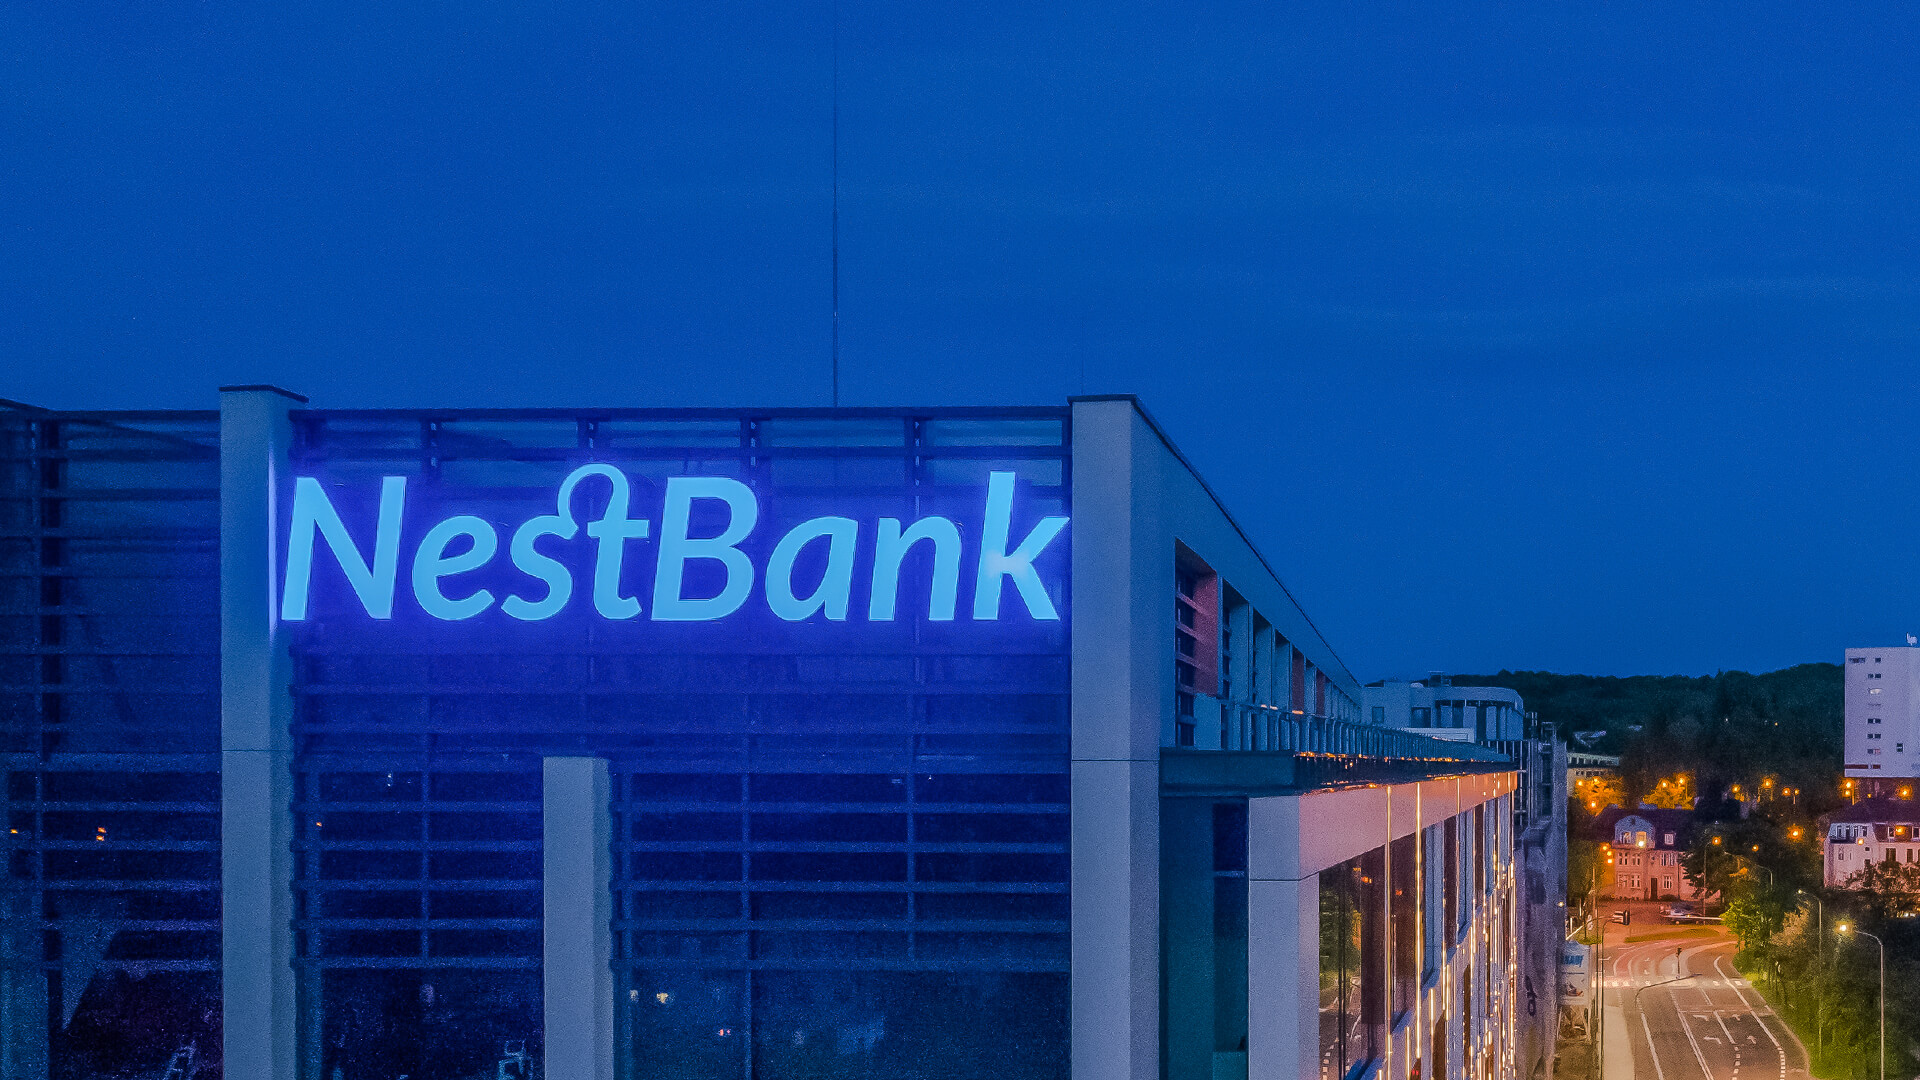 nestbank  - cartas de bloque-led-letters-bank-3d-chanel-letter-advertising-nest-bank-letters-3d-on-the-building-letters-nest-bank